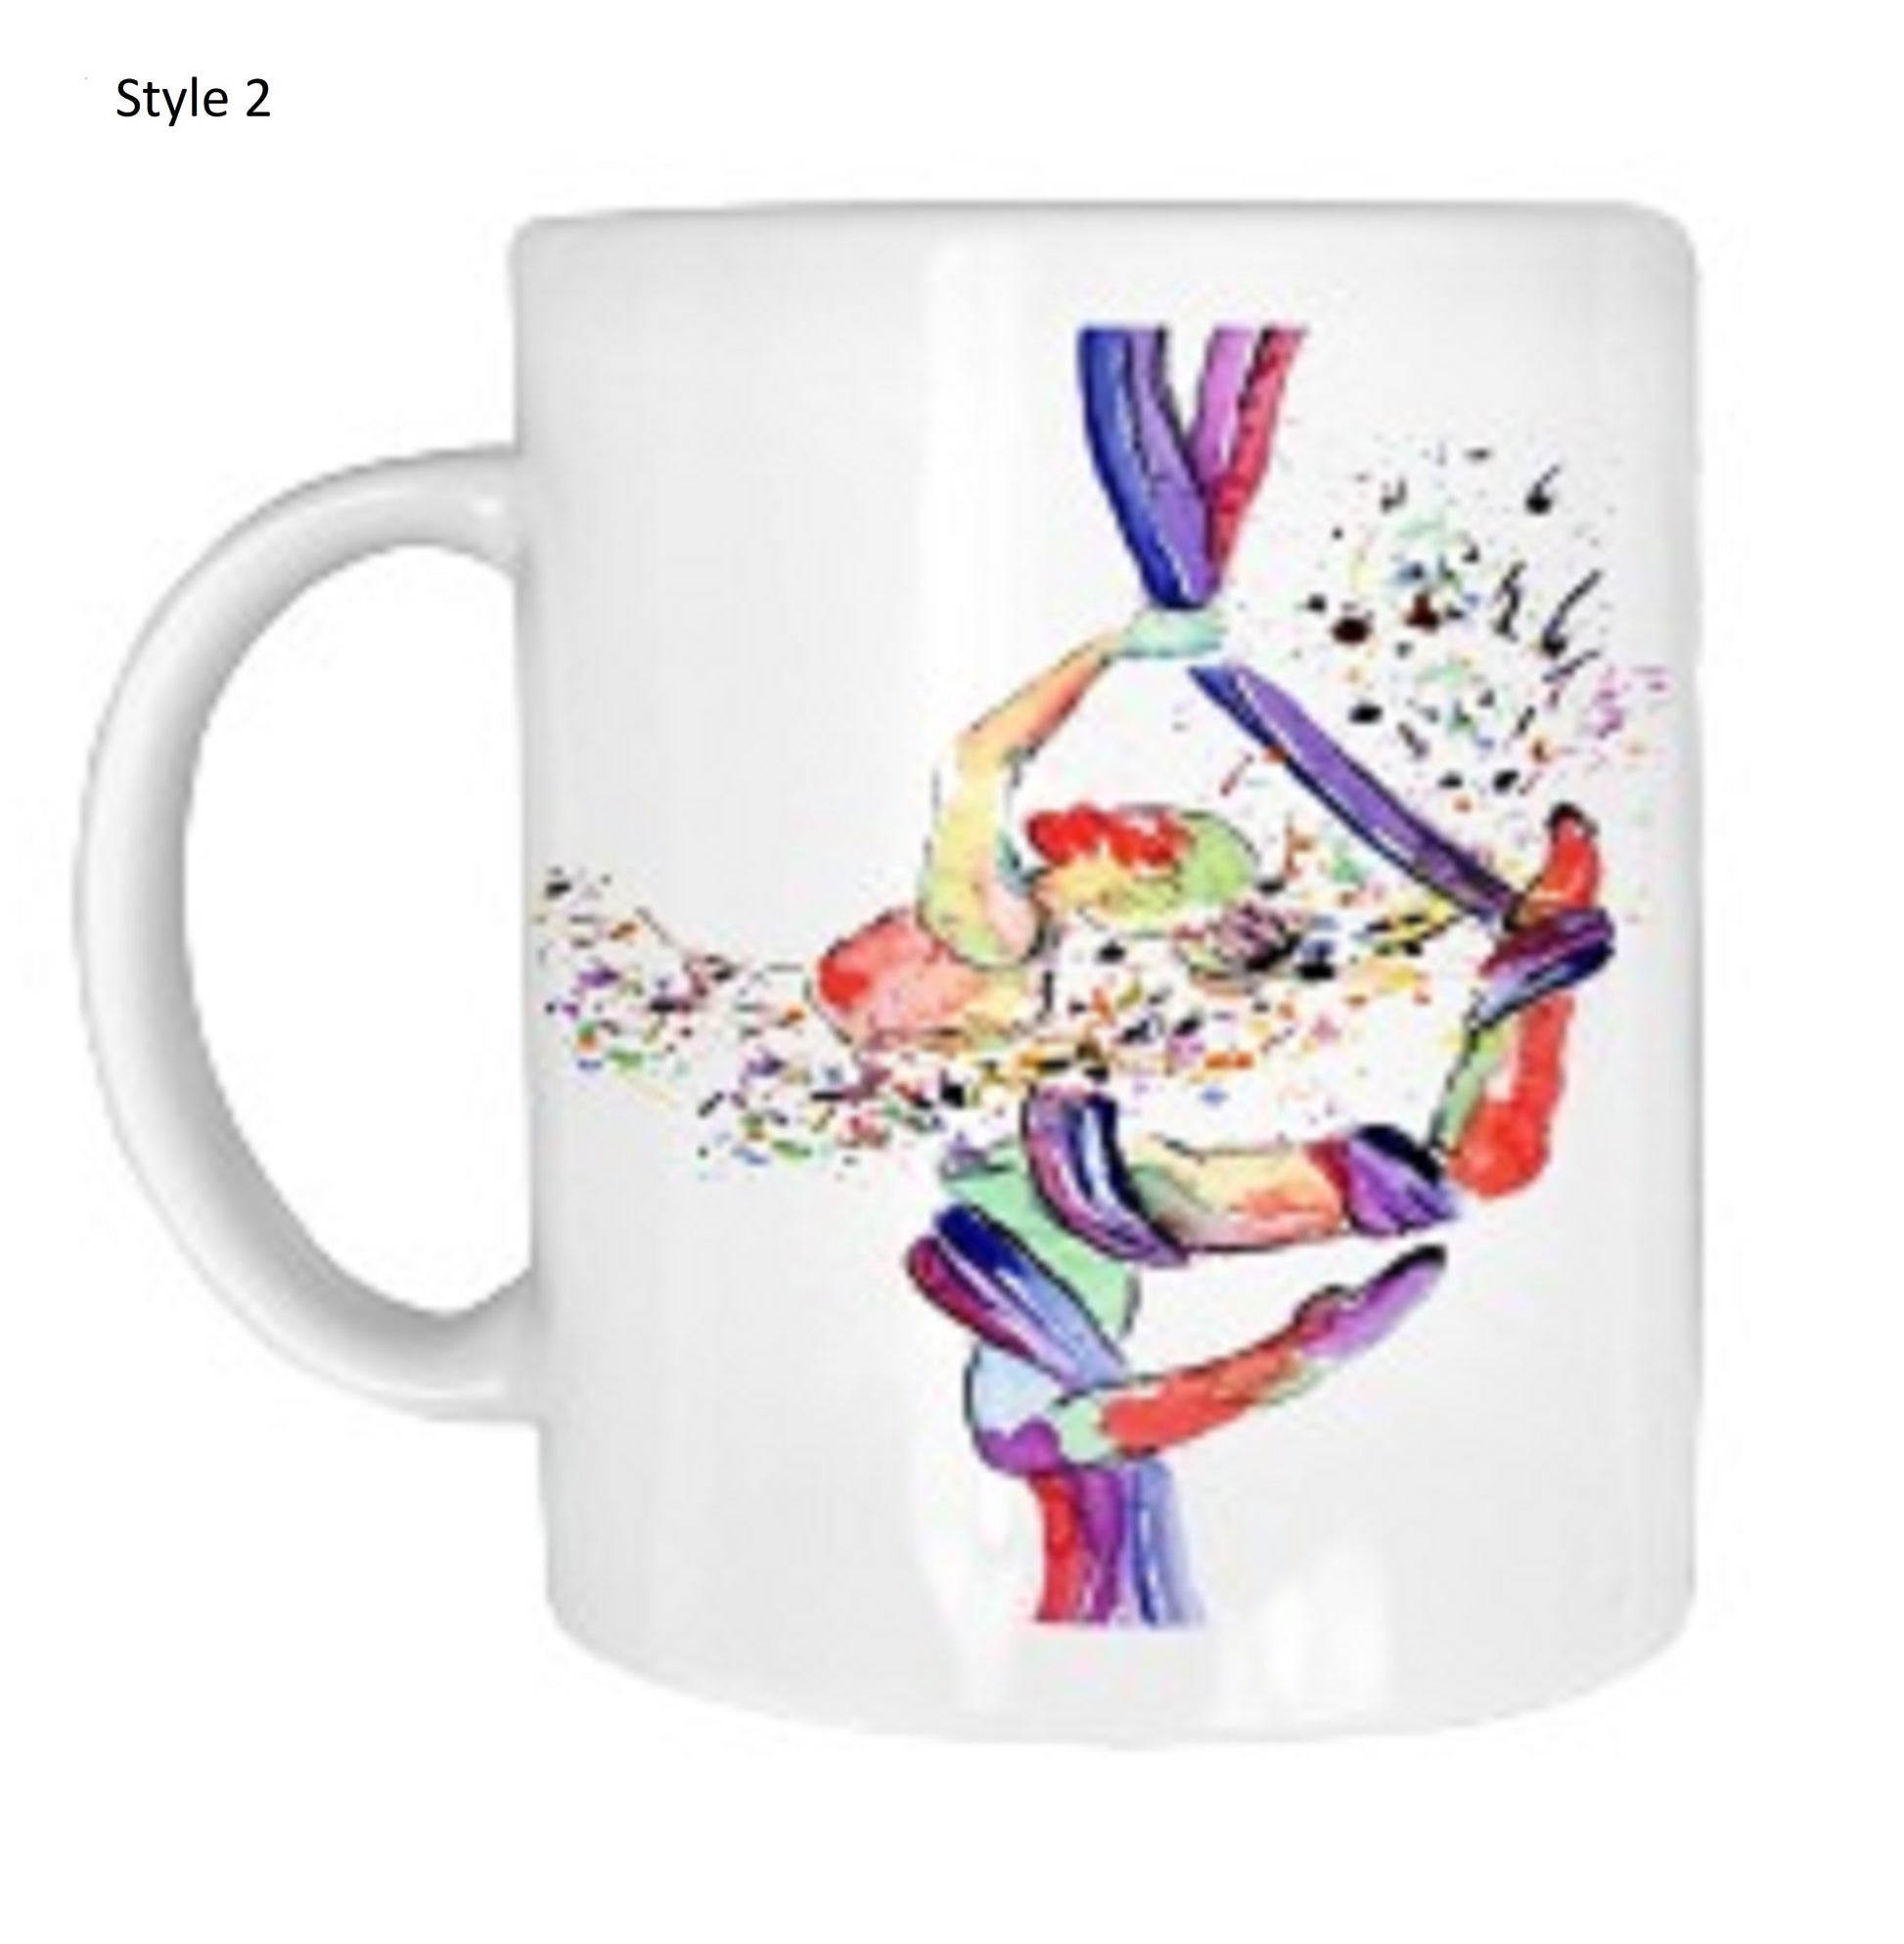  Custom Rainbow Aerial Gymnasts Mugs - Trendy Coffee Mugs for Any Occasion by Free Spirit Accessories sold by Free Spirit Accessories